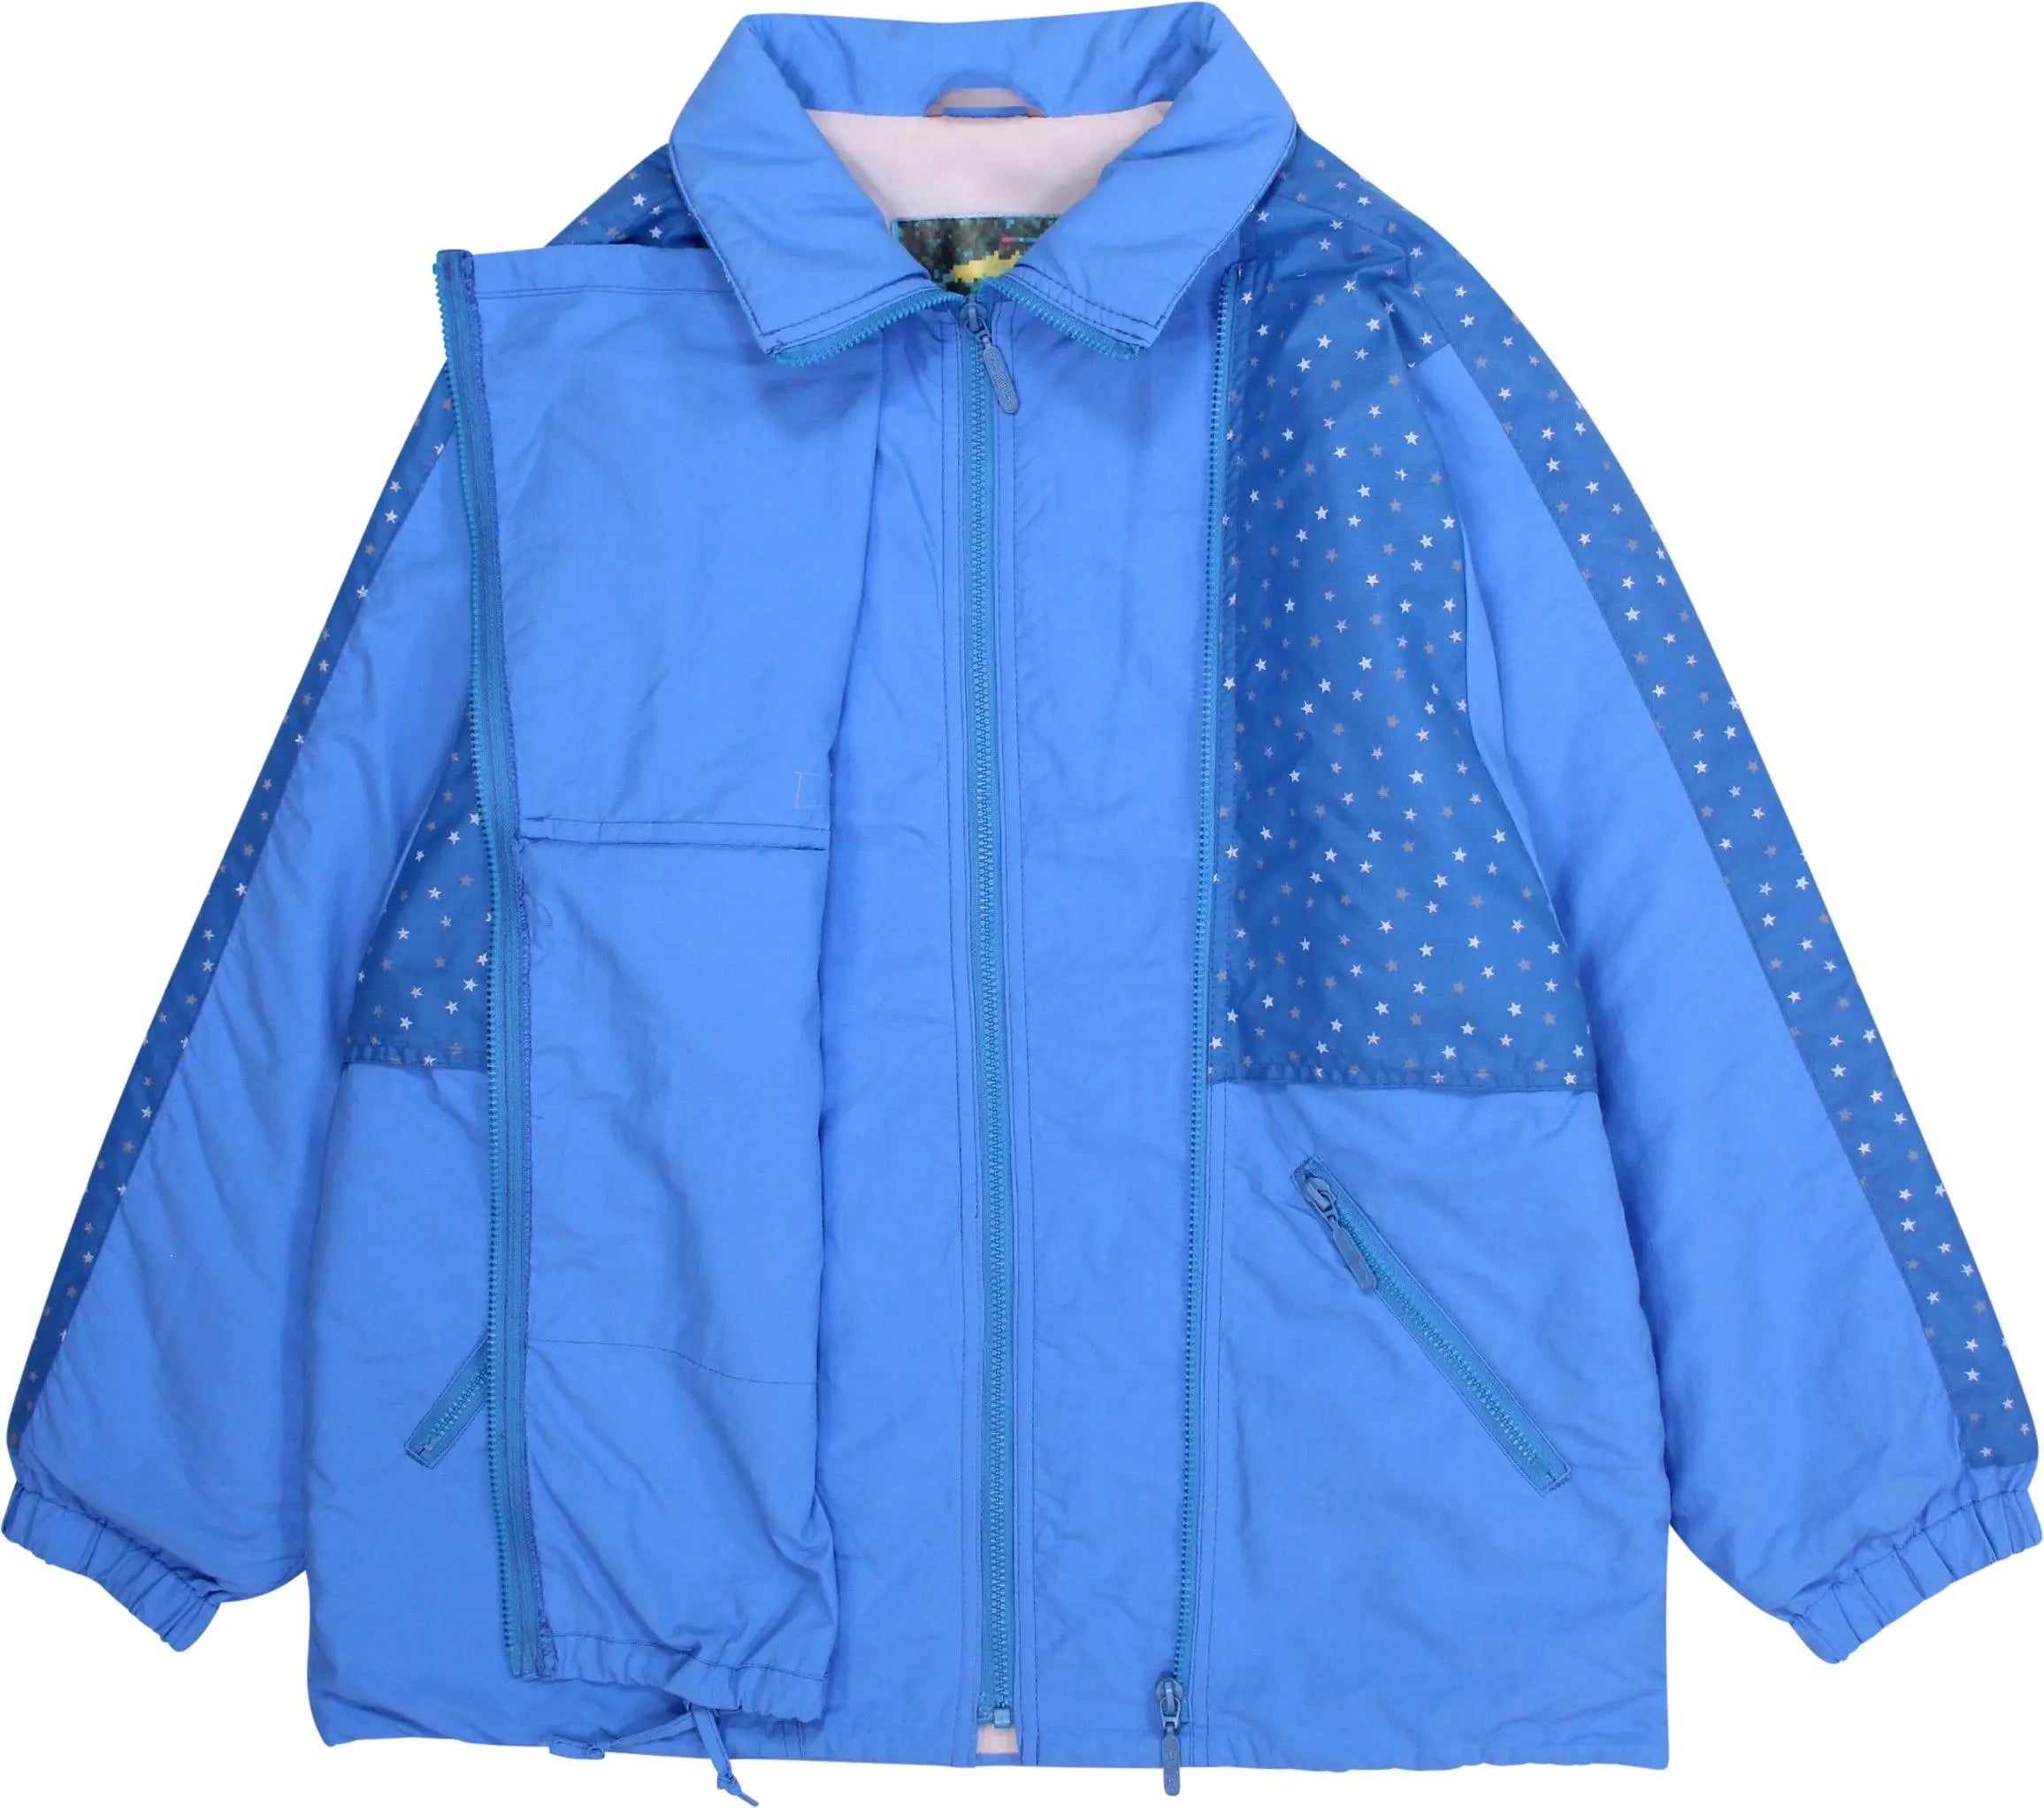 Arctic Story Ski Race - Blue Front Pocket Jacket- ThriftTale.com - Vintage and second handclothing